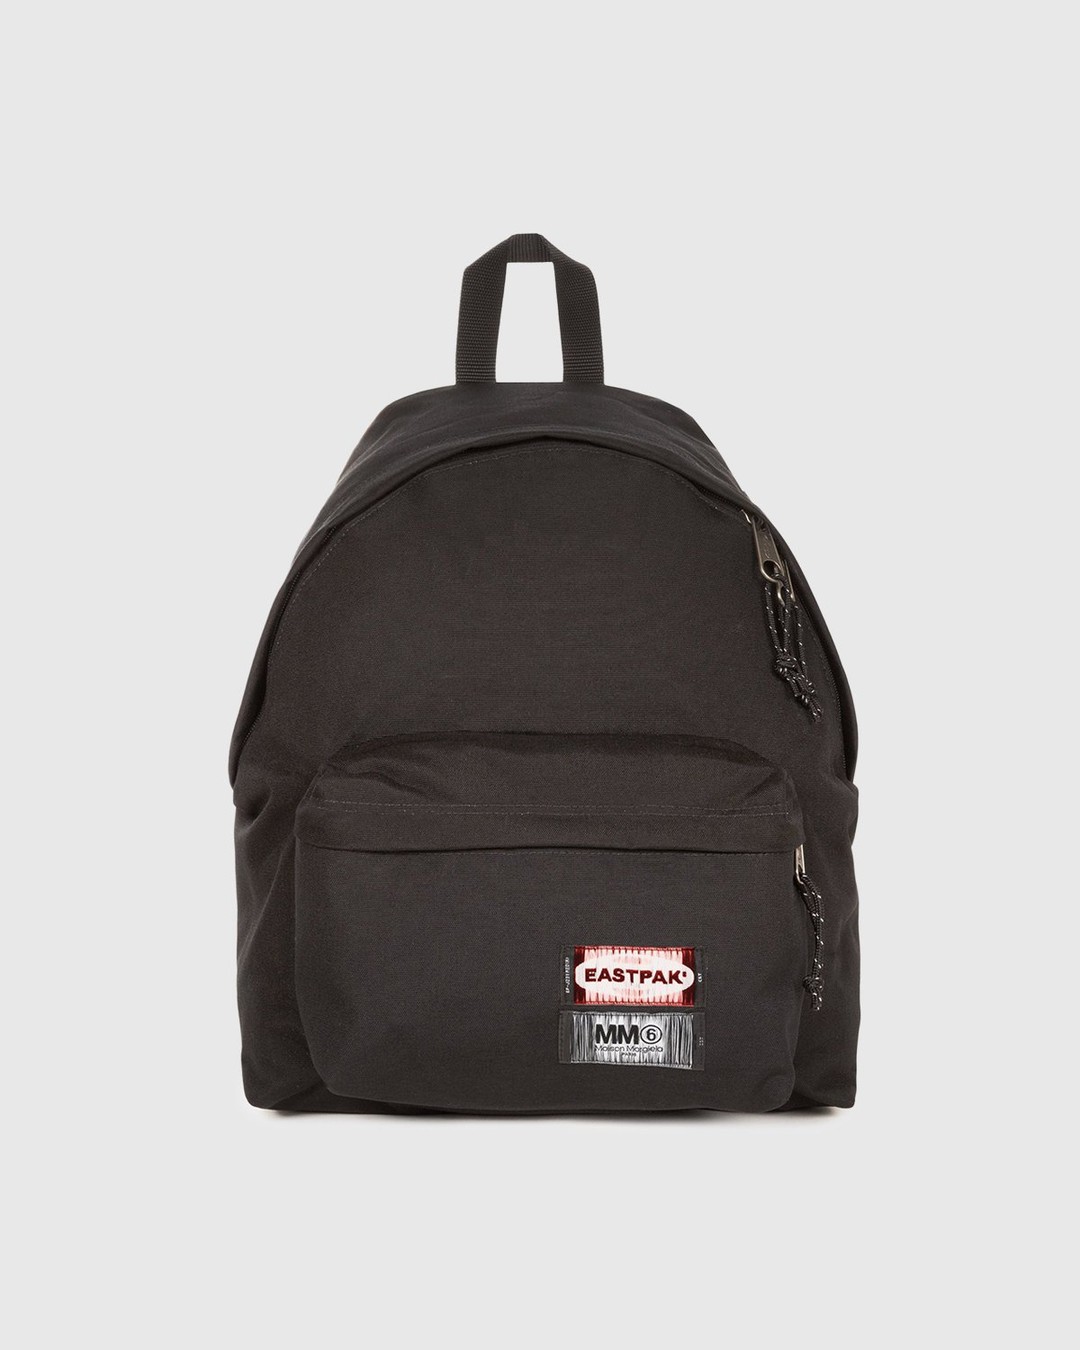 MM6 Maison Margiela x Eastpak – Padded Backpack Black - Backpacks - Black - Image 1